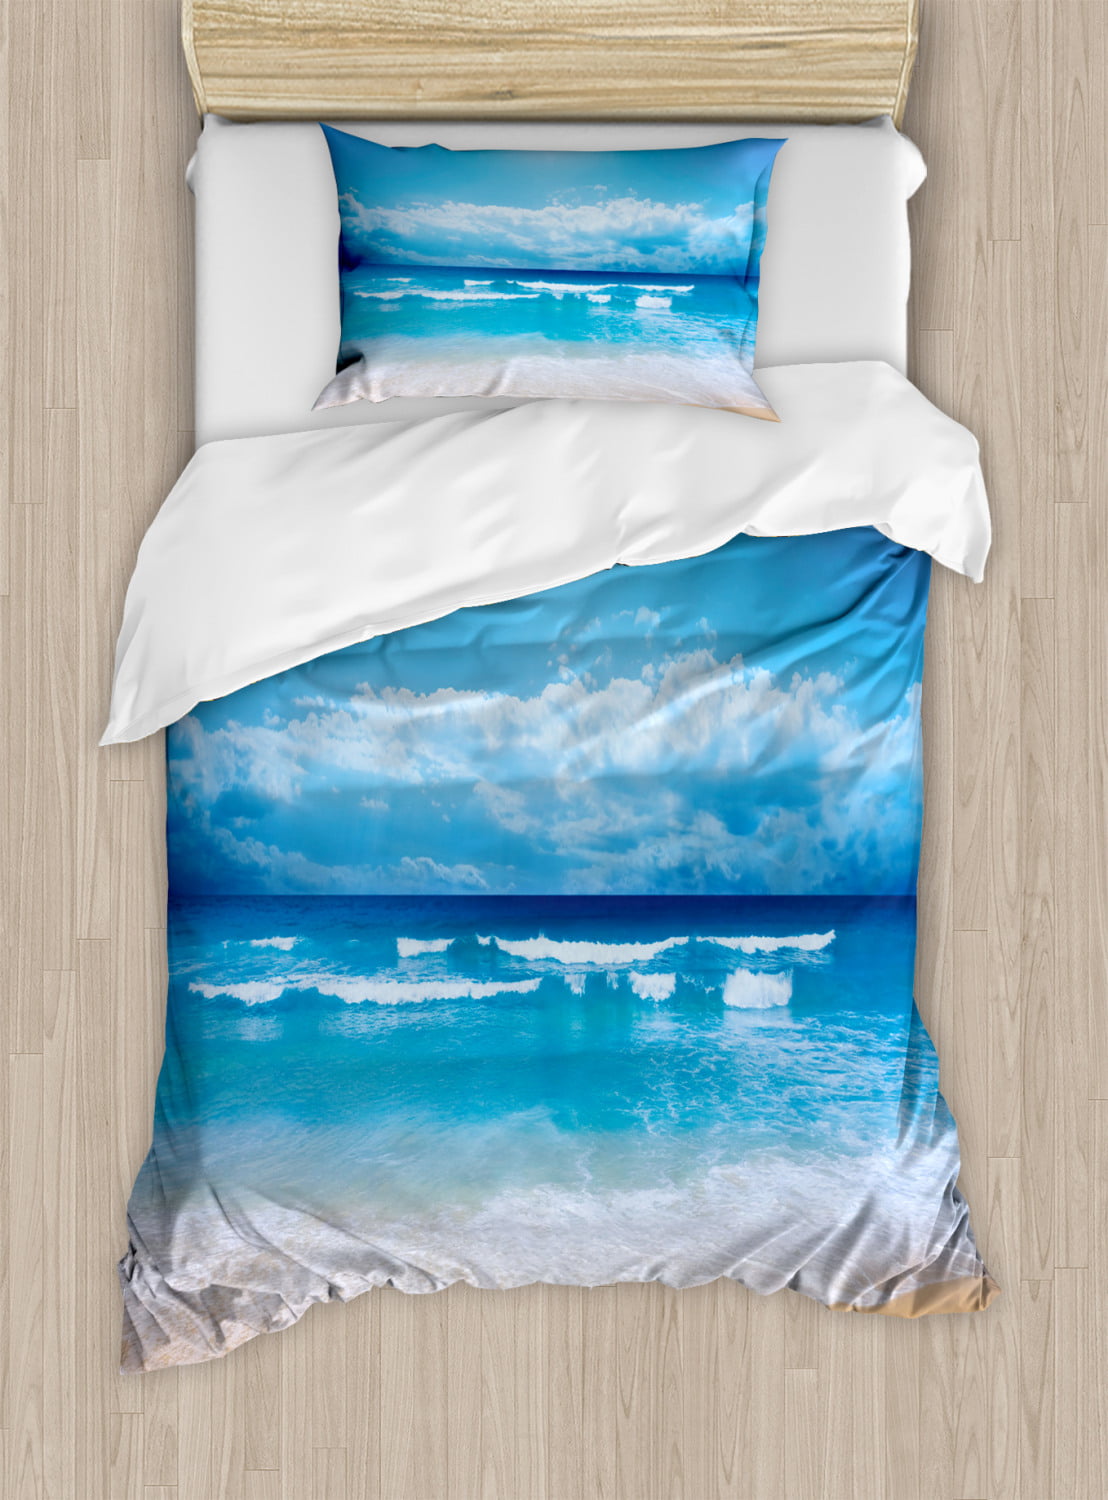 Beach Bedding Ocean Duvet Cover Twin Cloud Hawaiian Palm Tree Waves Comforter Cover Tropical Island and Sea Beach Nature Theme Print bedding Blue,Zipper Decorative Bedding Set with 1 Pillow Sham